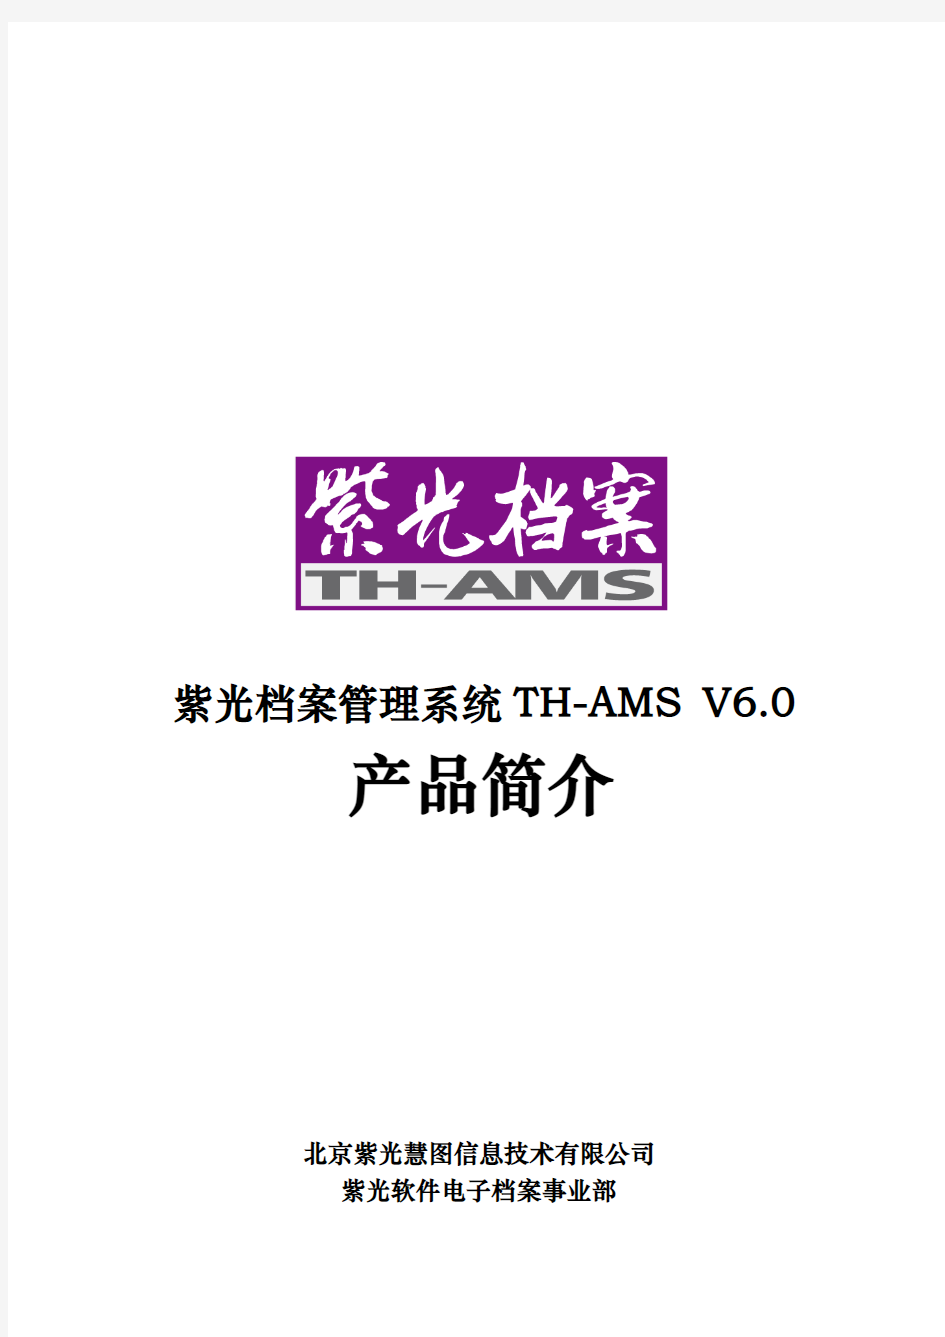 紫光档案管理系统TH-AMS V6.0